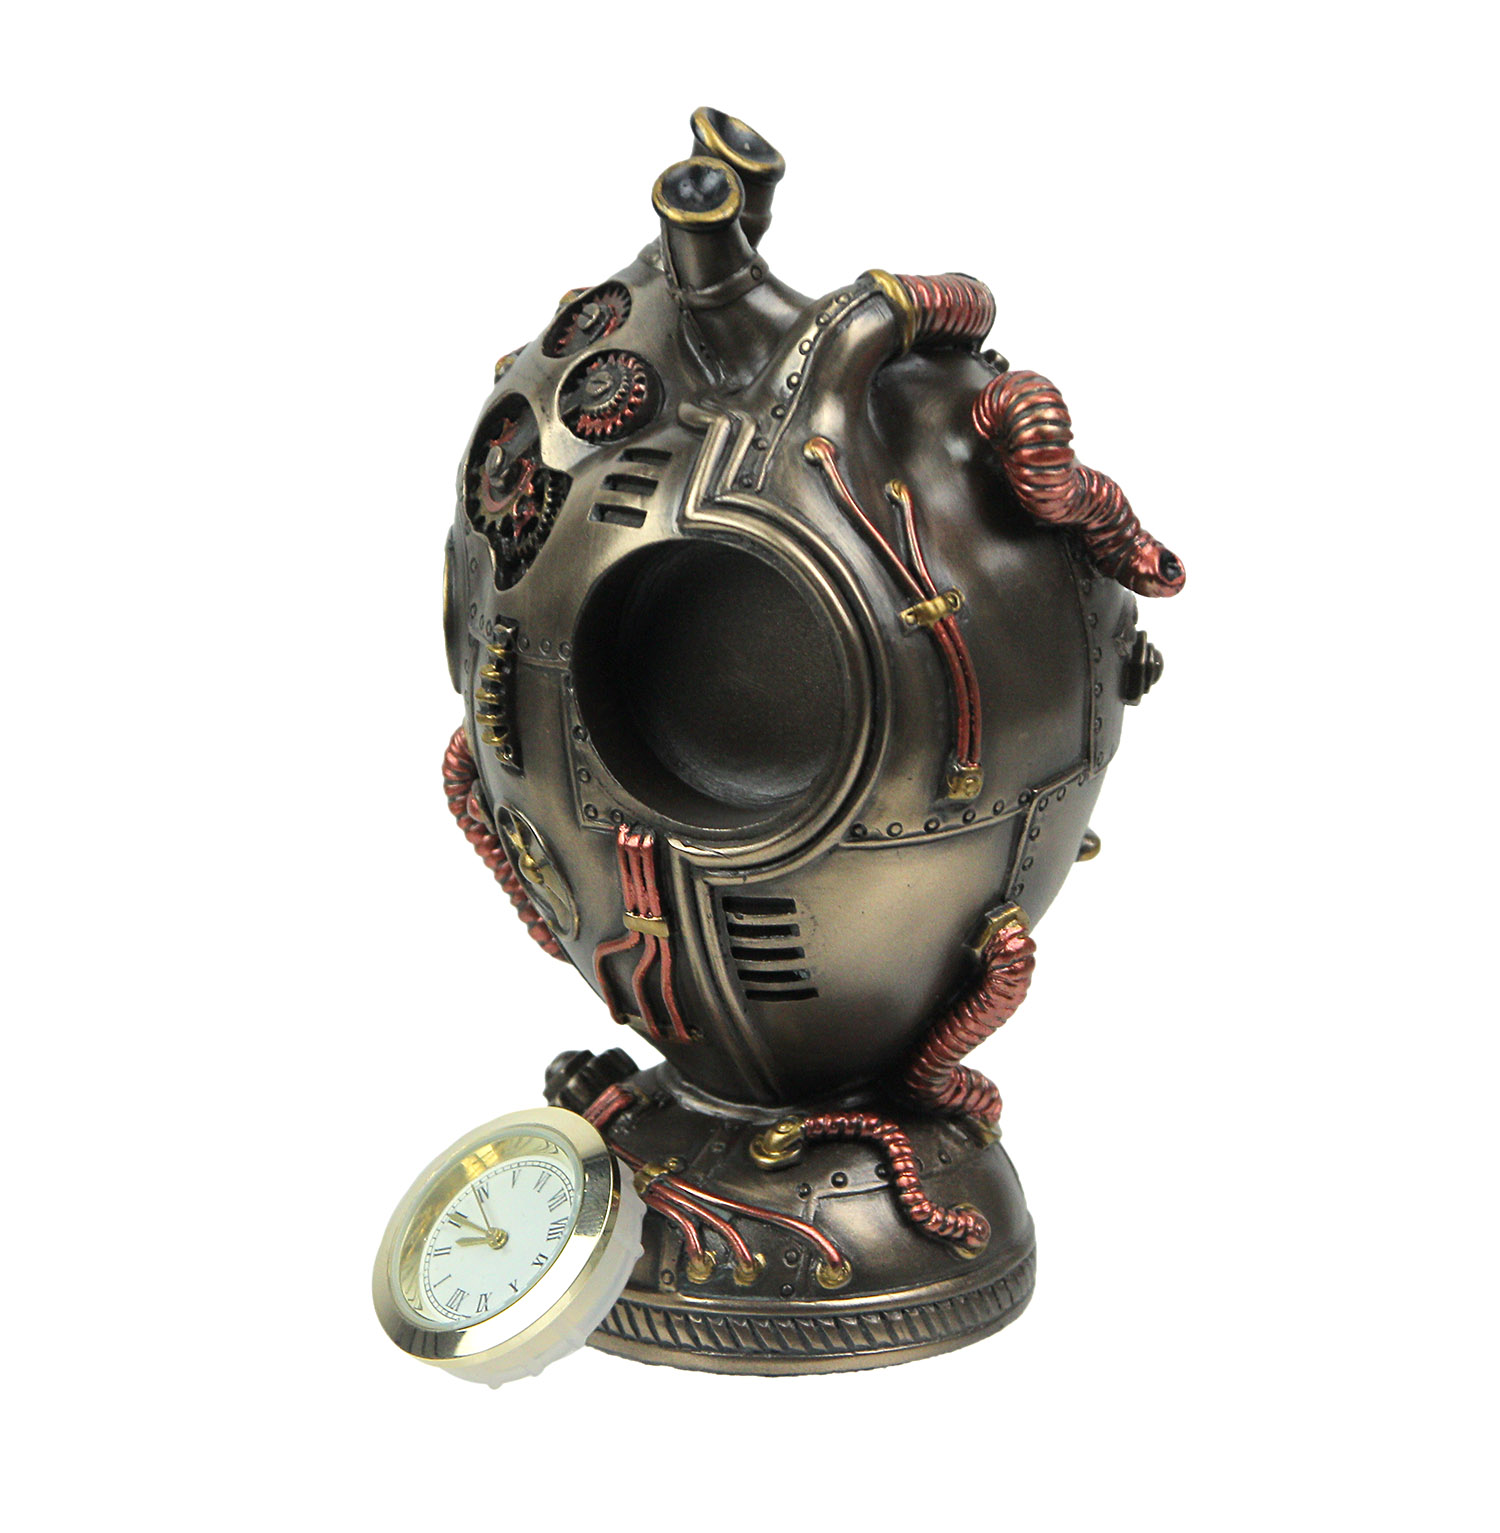 Veronese Design Bronze Finished Steampunk Human Heart Desk Clock 4.5 Inches High